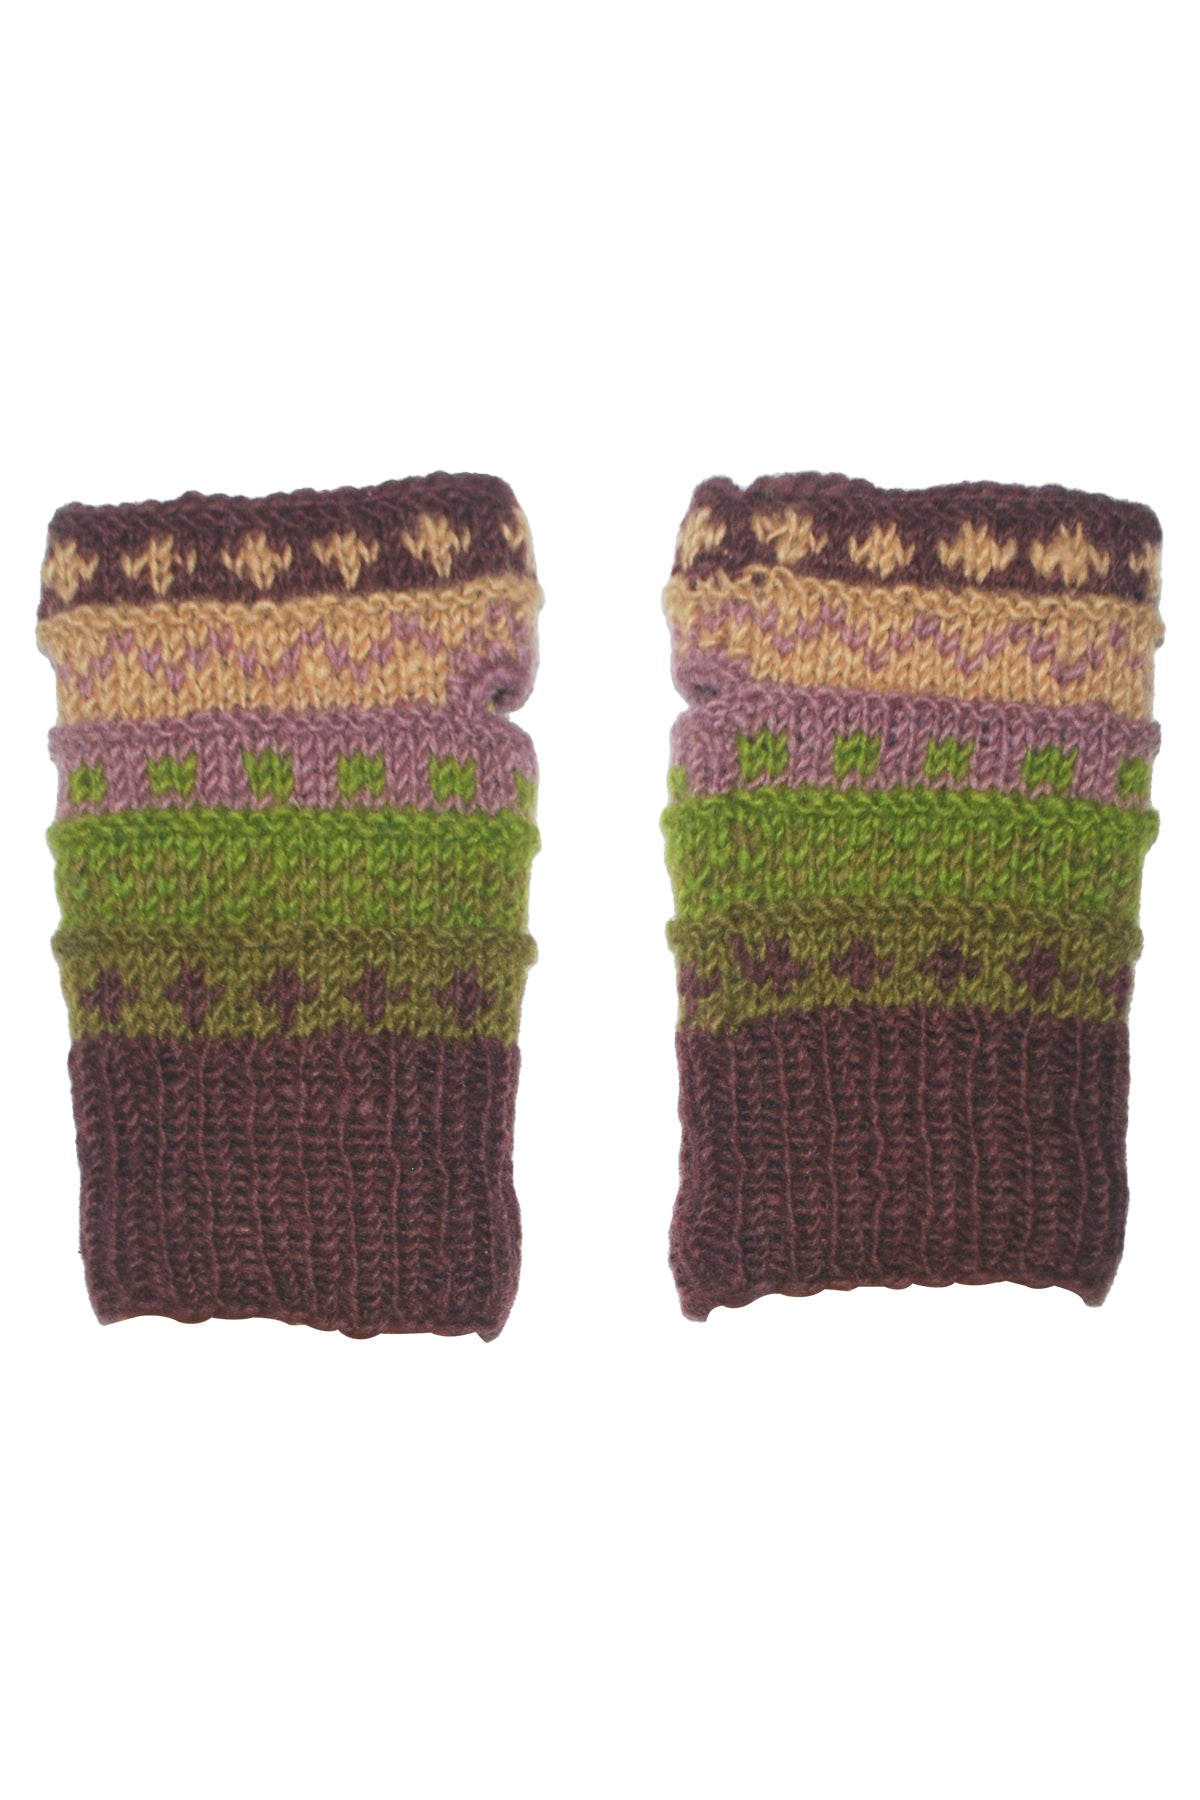 Winter hand knit handwarmer, fingerless Gloves